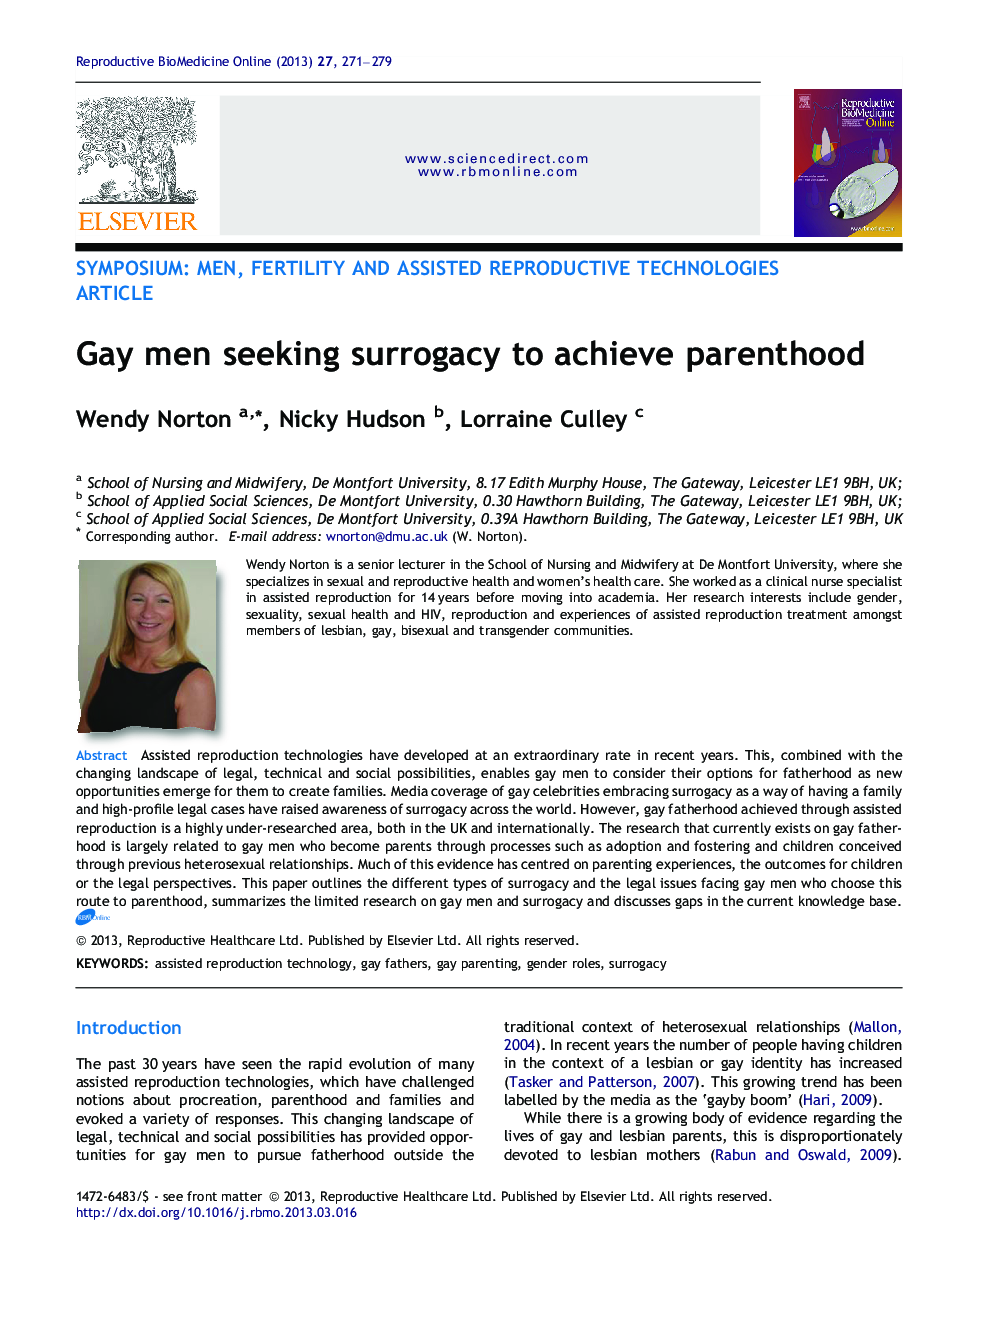 Gay men seeking surrogacy to achieve parenthood 